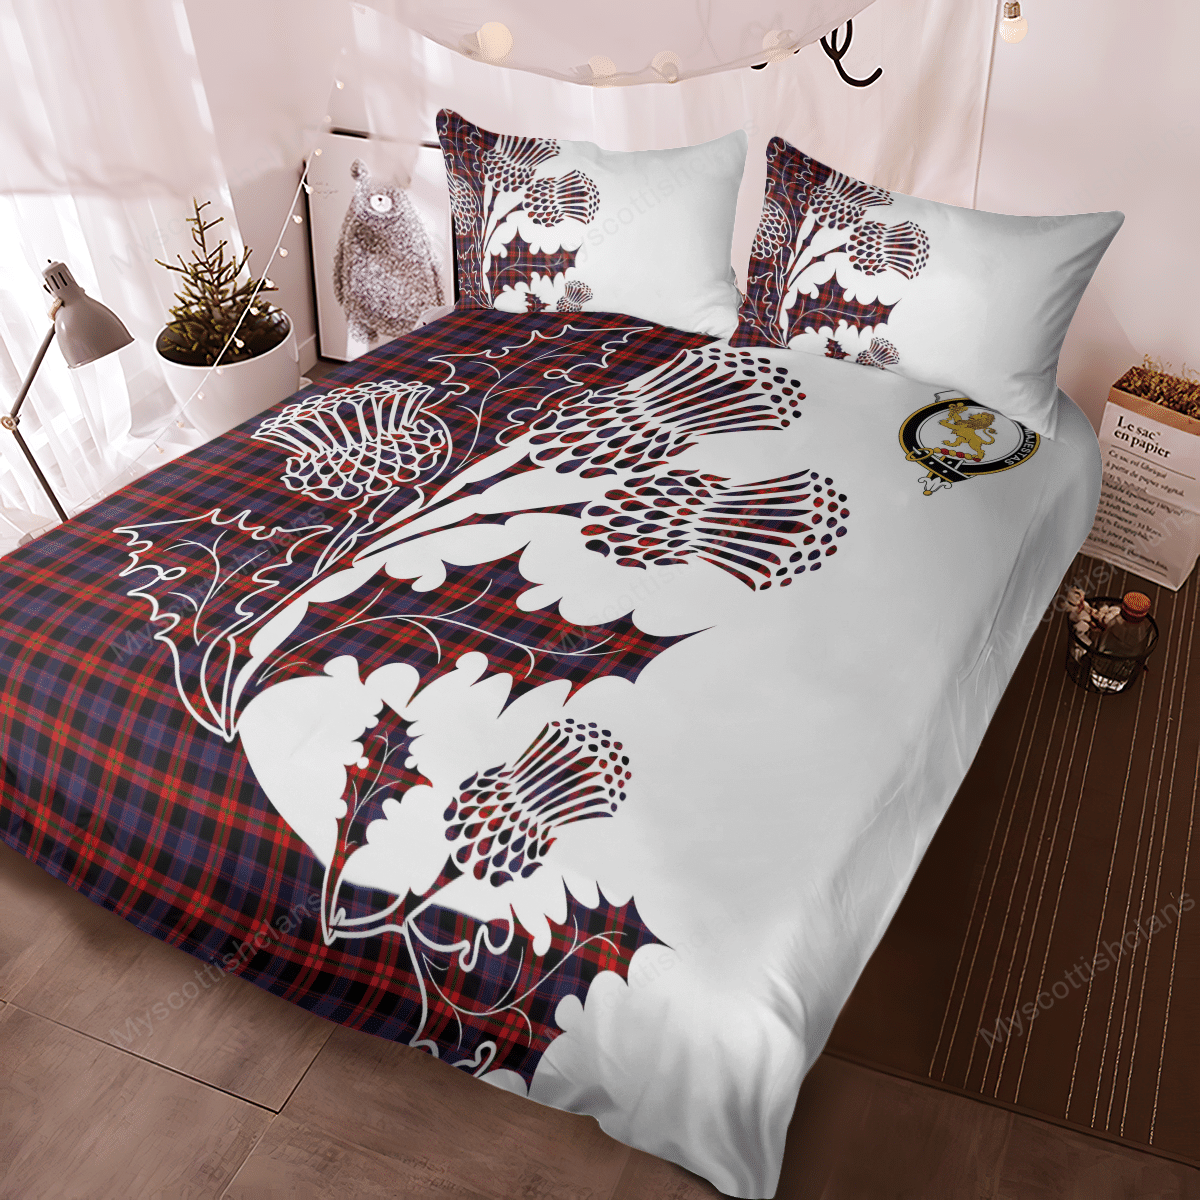 Broun Tartan Crest Bedding Set - Thistle Style